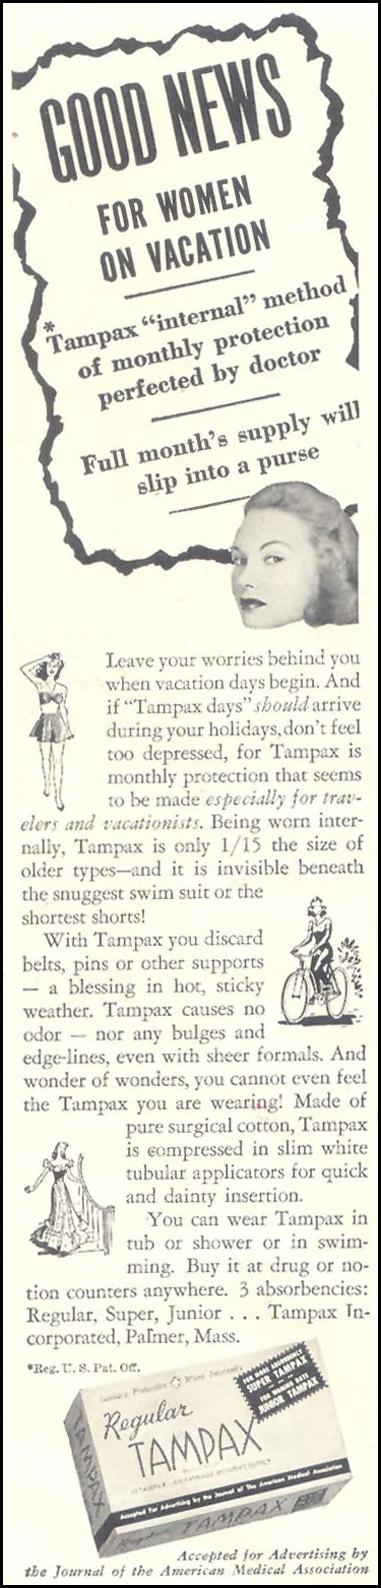 TAMPAX
GOOD HOUSEKEEPING
07/01/1948
p. 108